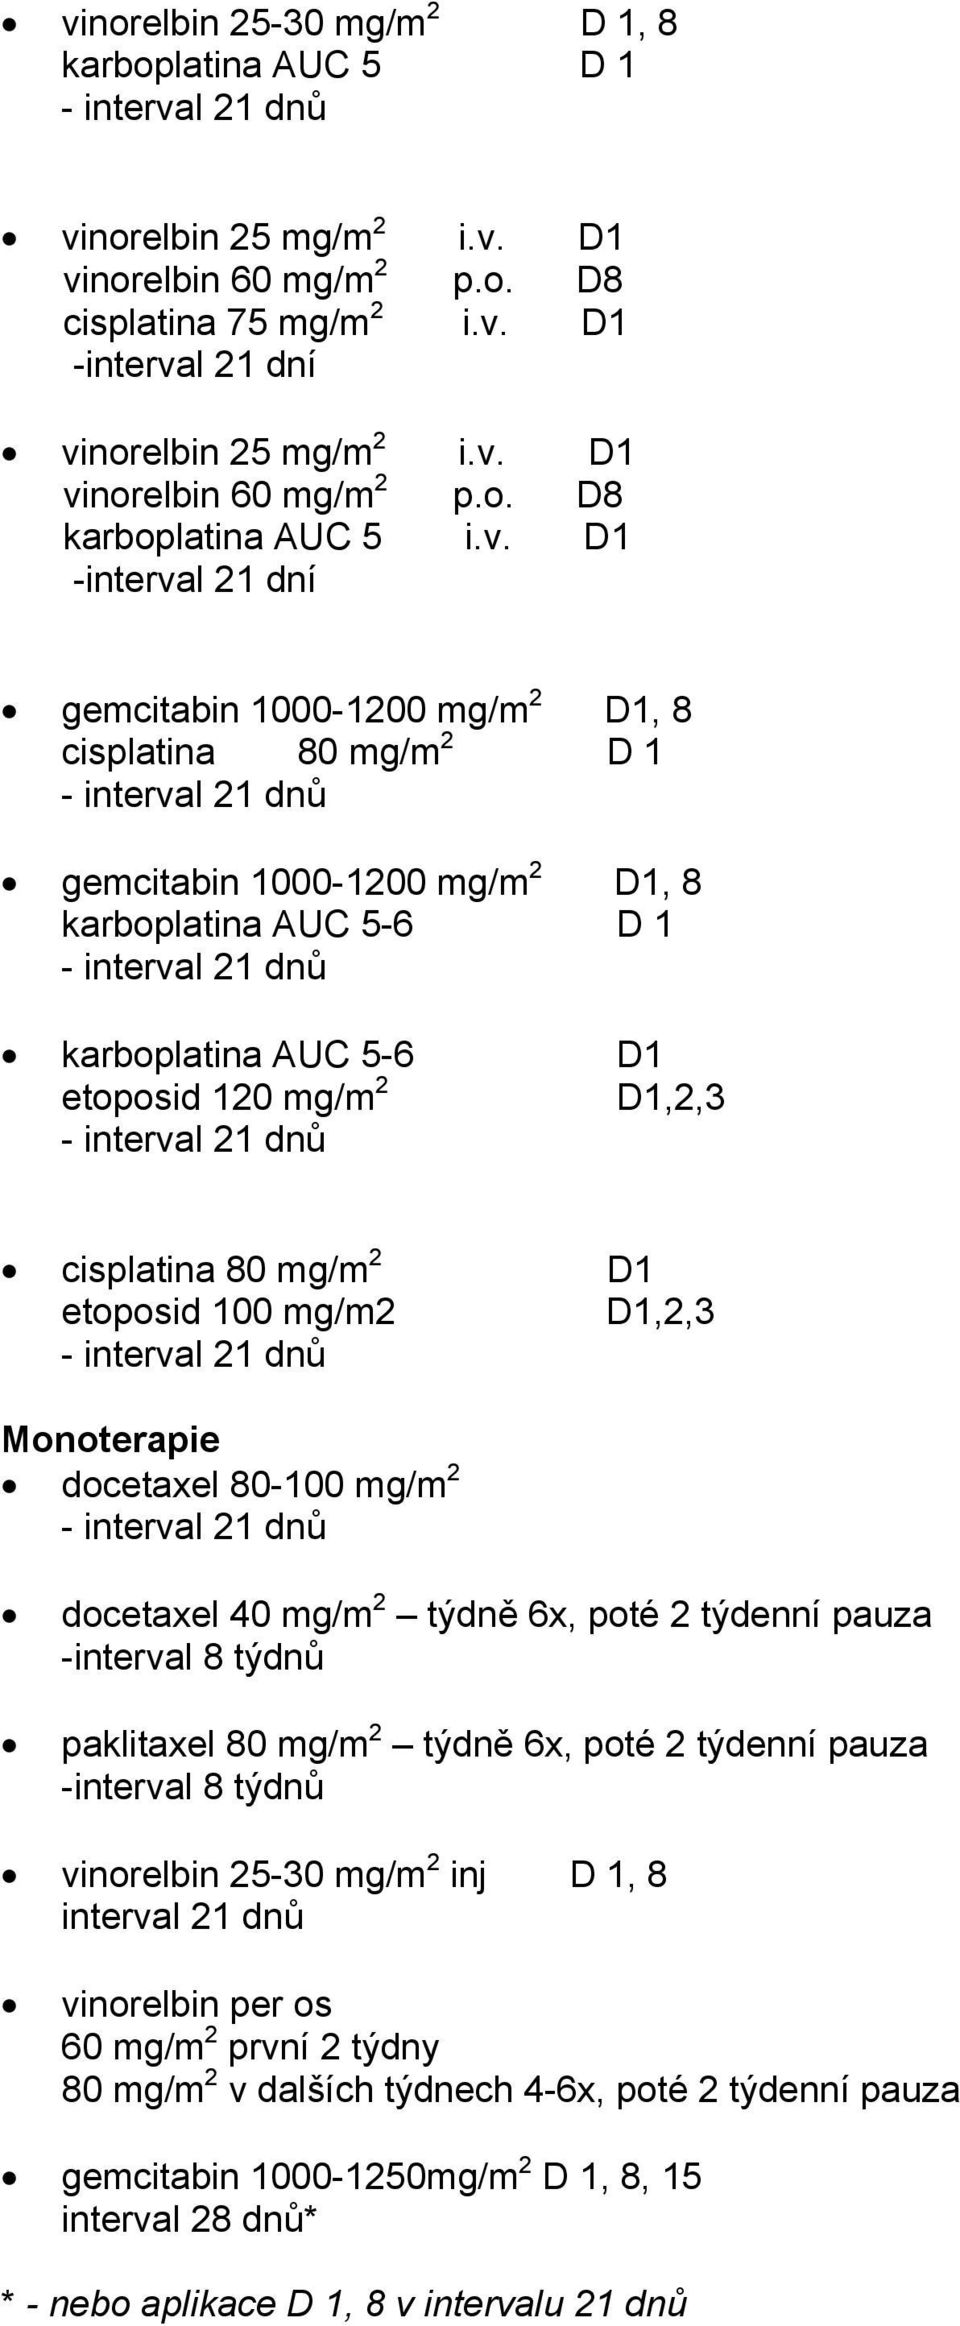 cisplatina 80 mg/m 2 D1 etoposid 100 mg/m2 D1,2,3 Monoterapie docetaxel 80-100 mg/m 2 docetaxel 40 mg/m 2 týdně 6x, poté 2 týdenní pauza -interval 8 týdnů paklitaxel 80 mg/m 2 týdně 6x, poté 2